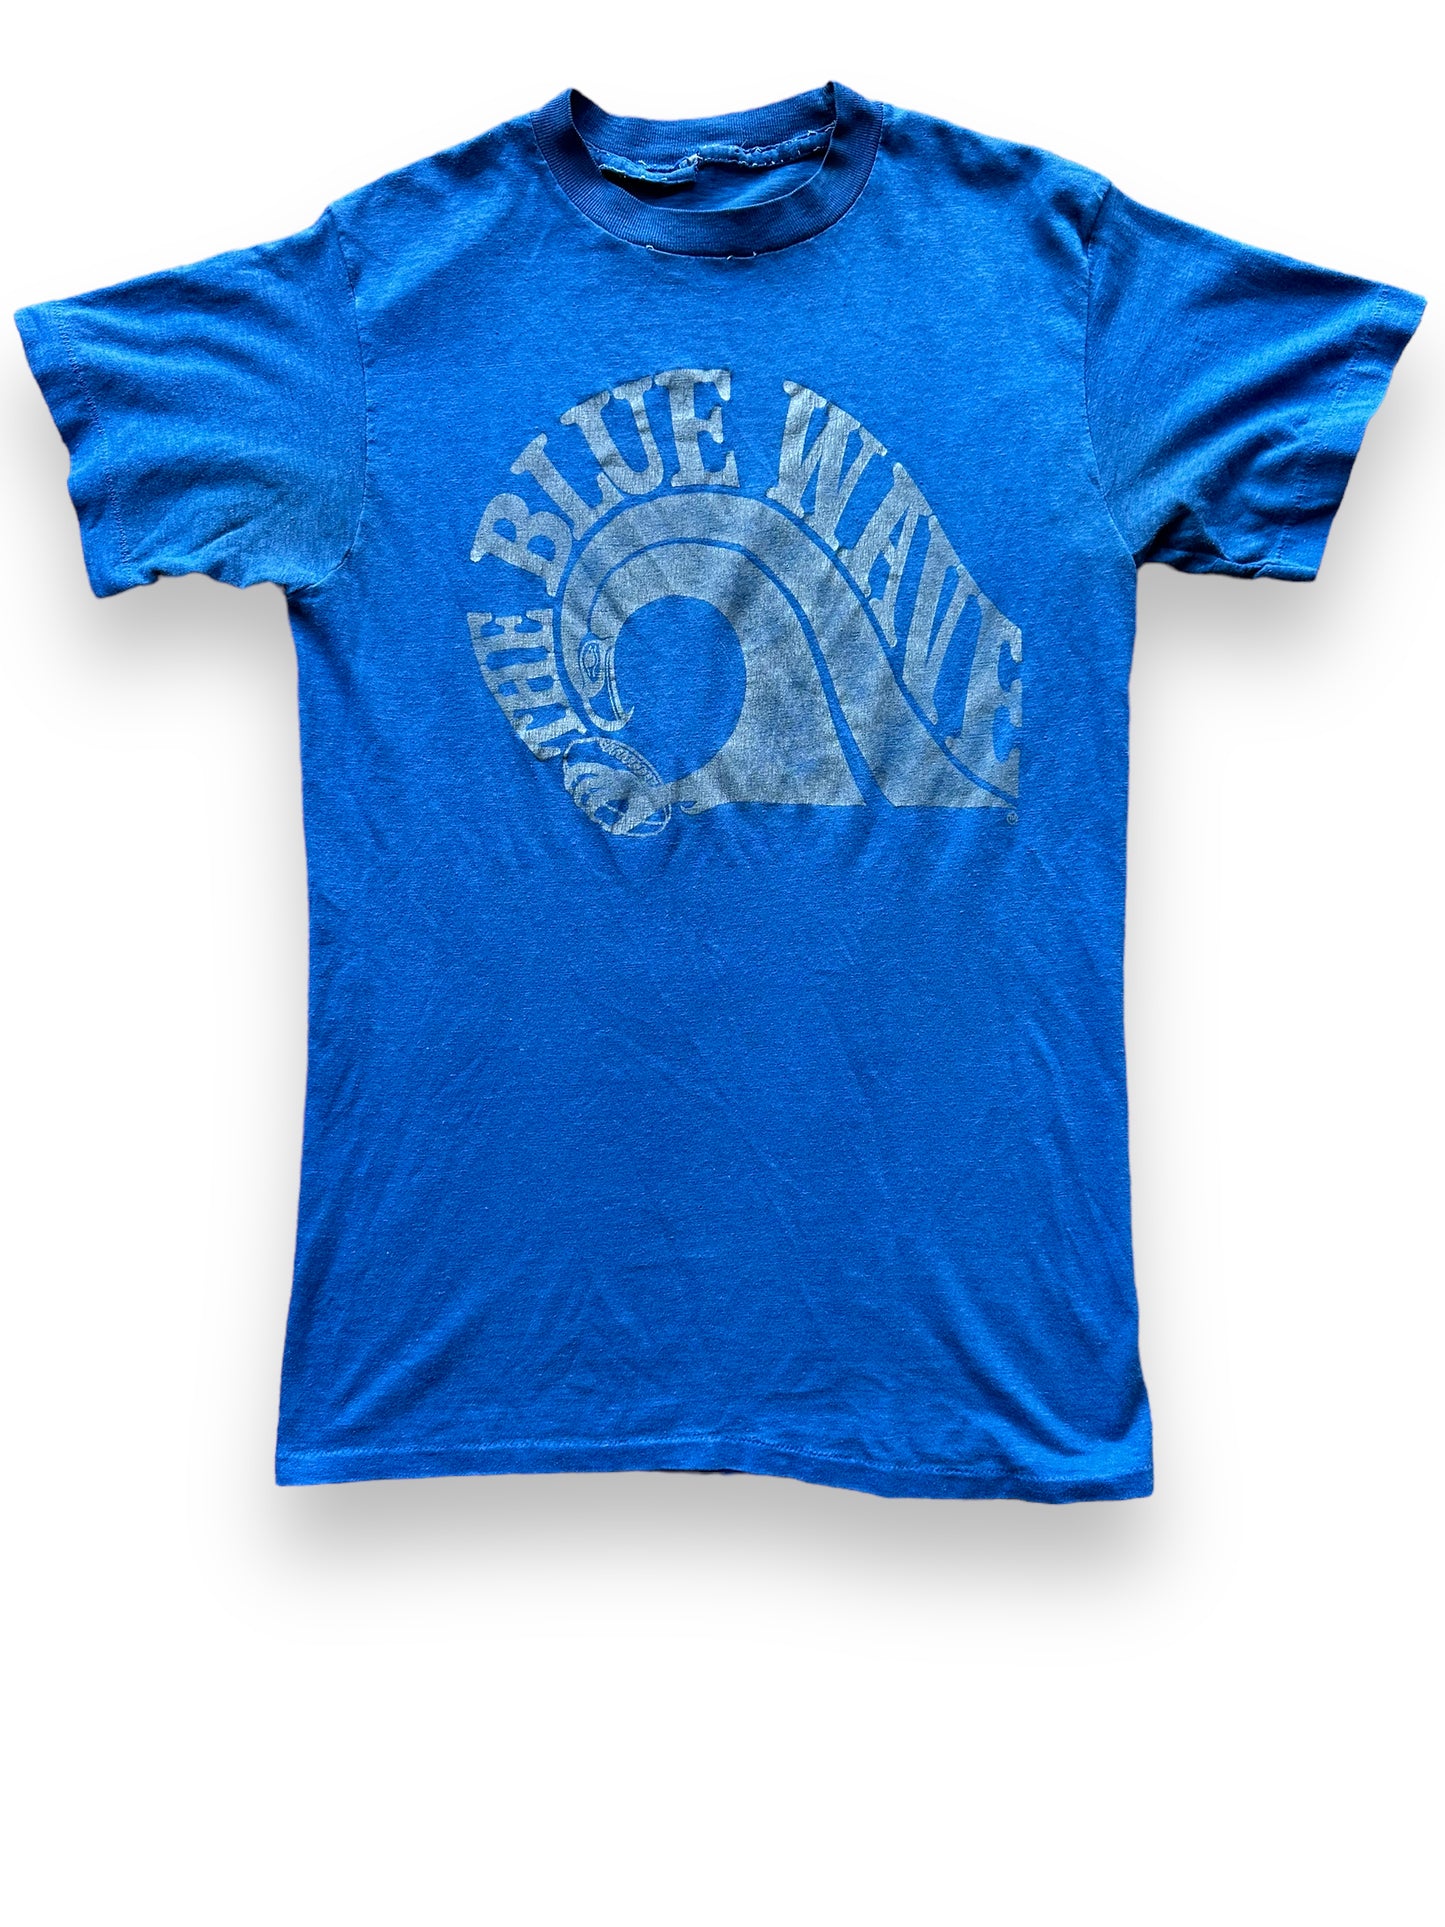 Front View of Vintage Seahawks Blue Wave Tee SZ S | Vintage Seahawks T-Shirts Seattle | Barn Owl Vintage Tees Seattle